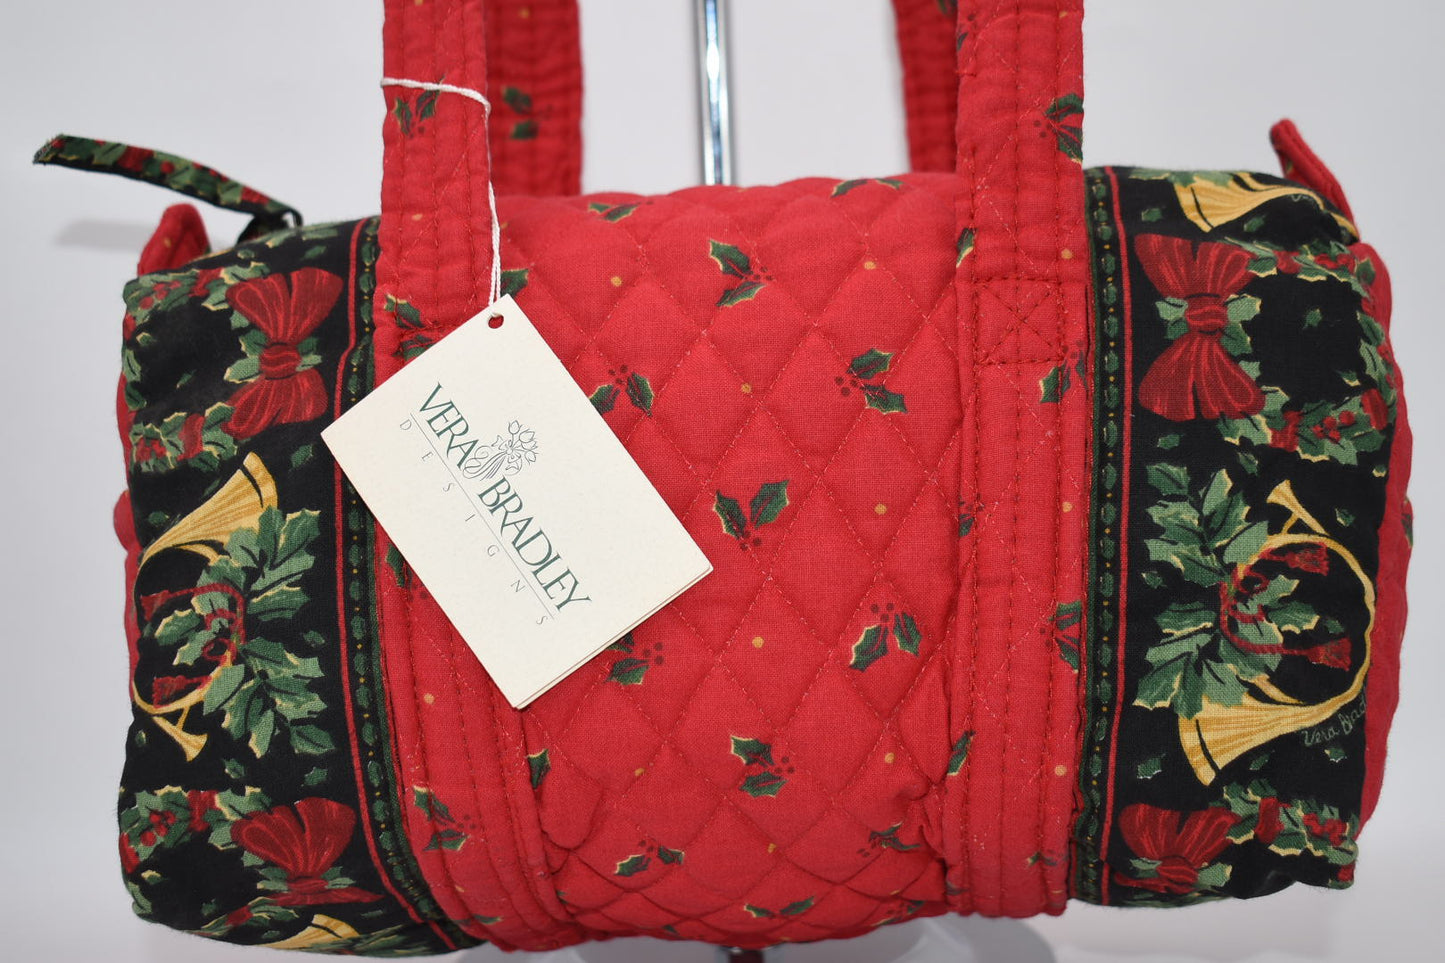 Vera Bradley Rare & Vintage "Red Holiday" Handbag